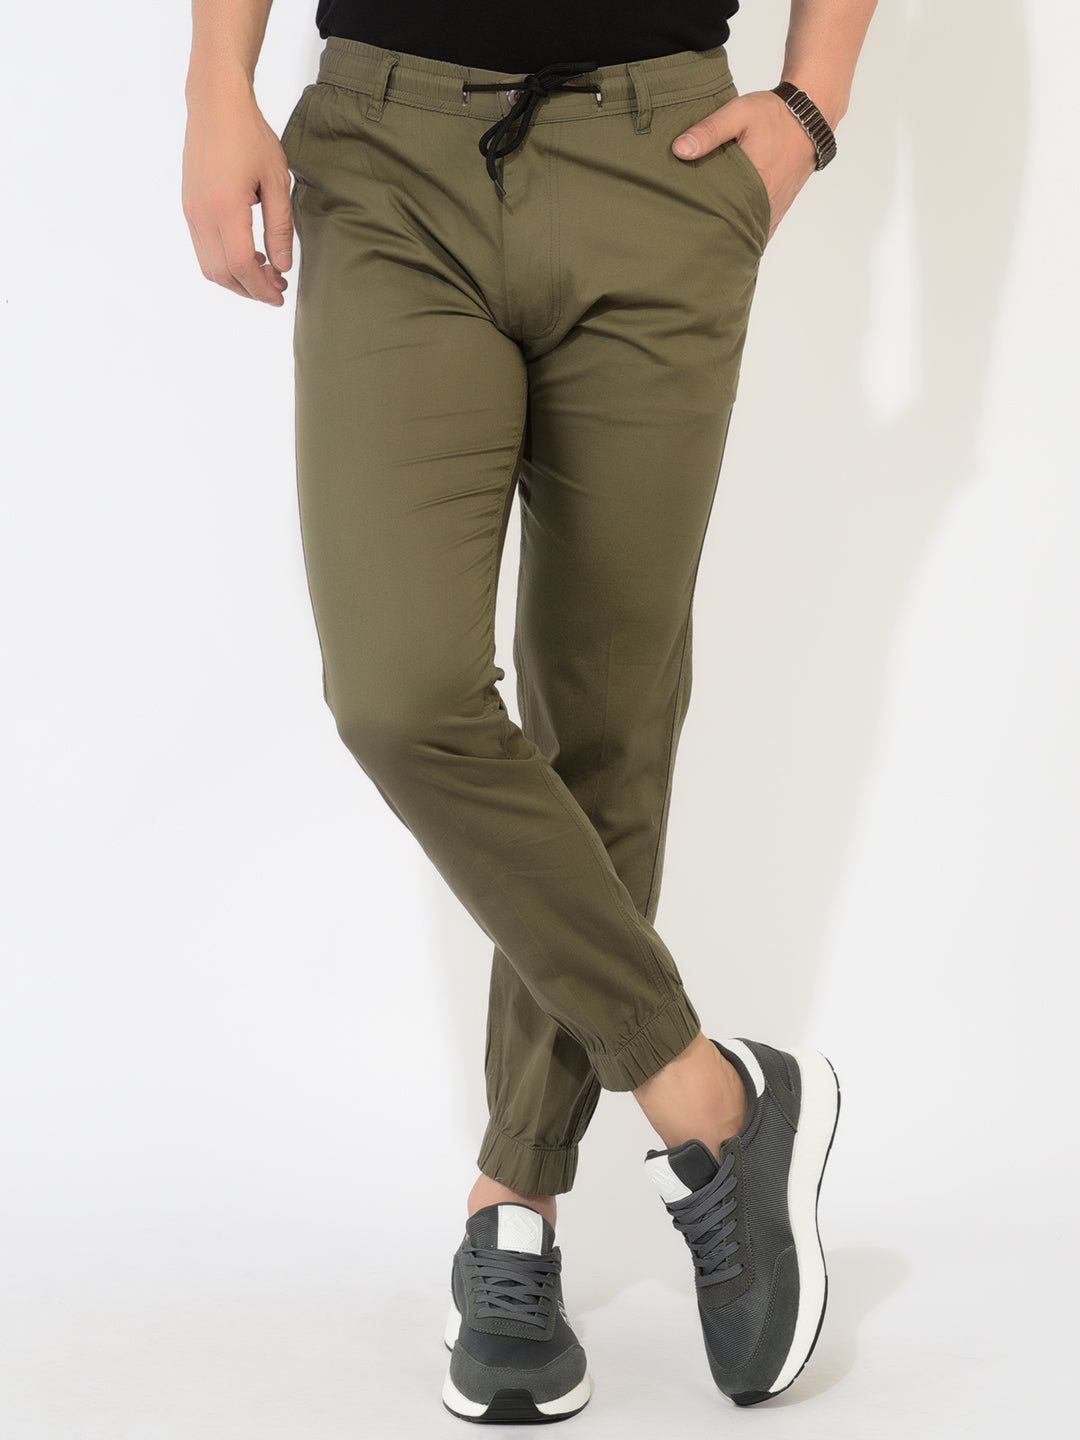 Shop Cobb Green Slim Fit Chinos Jogger - Comfortable and Stylish